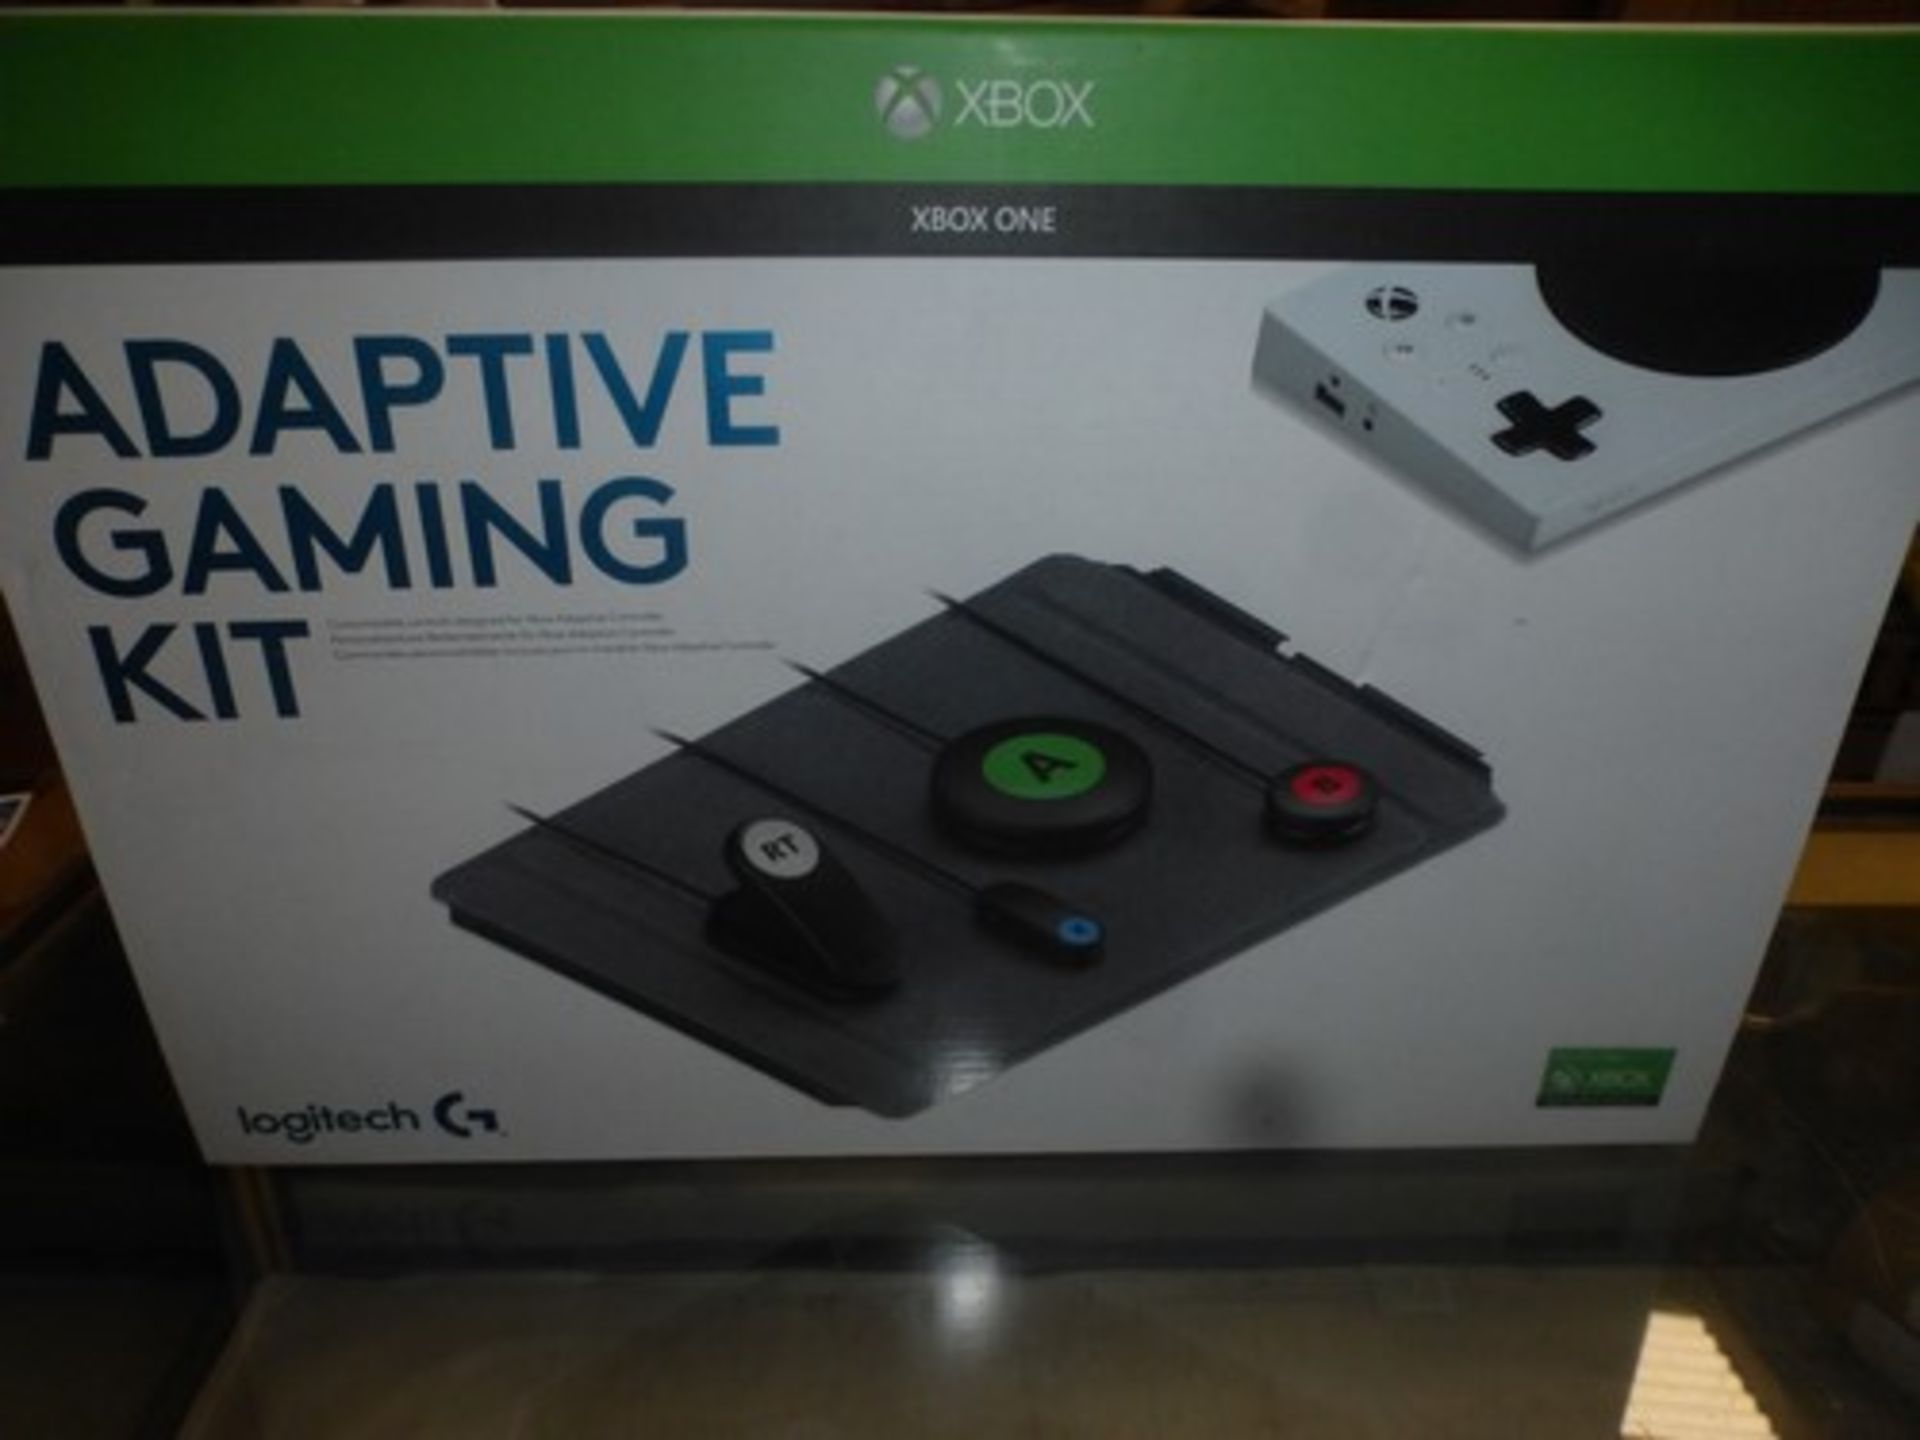 1 x XBOX One adaptive Logitech gaming kit, EAN 5099206087606 - New in box (C11D)